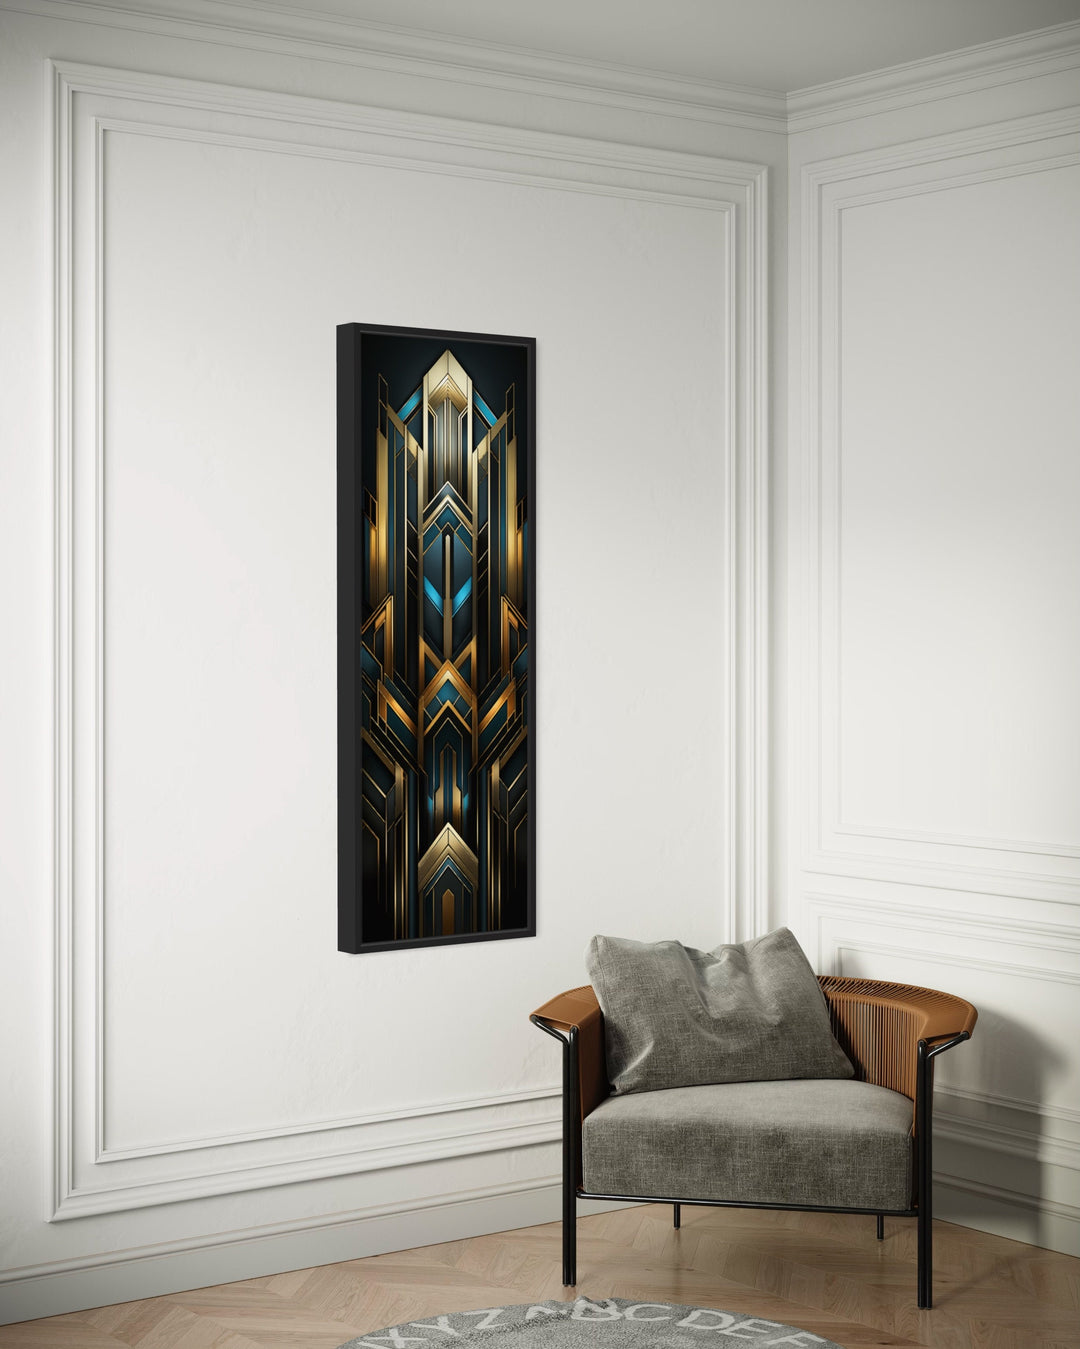 tall Narrow Art Deco Gold Black Blue Vertical Wall Art in entrance hall behind armchair